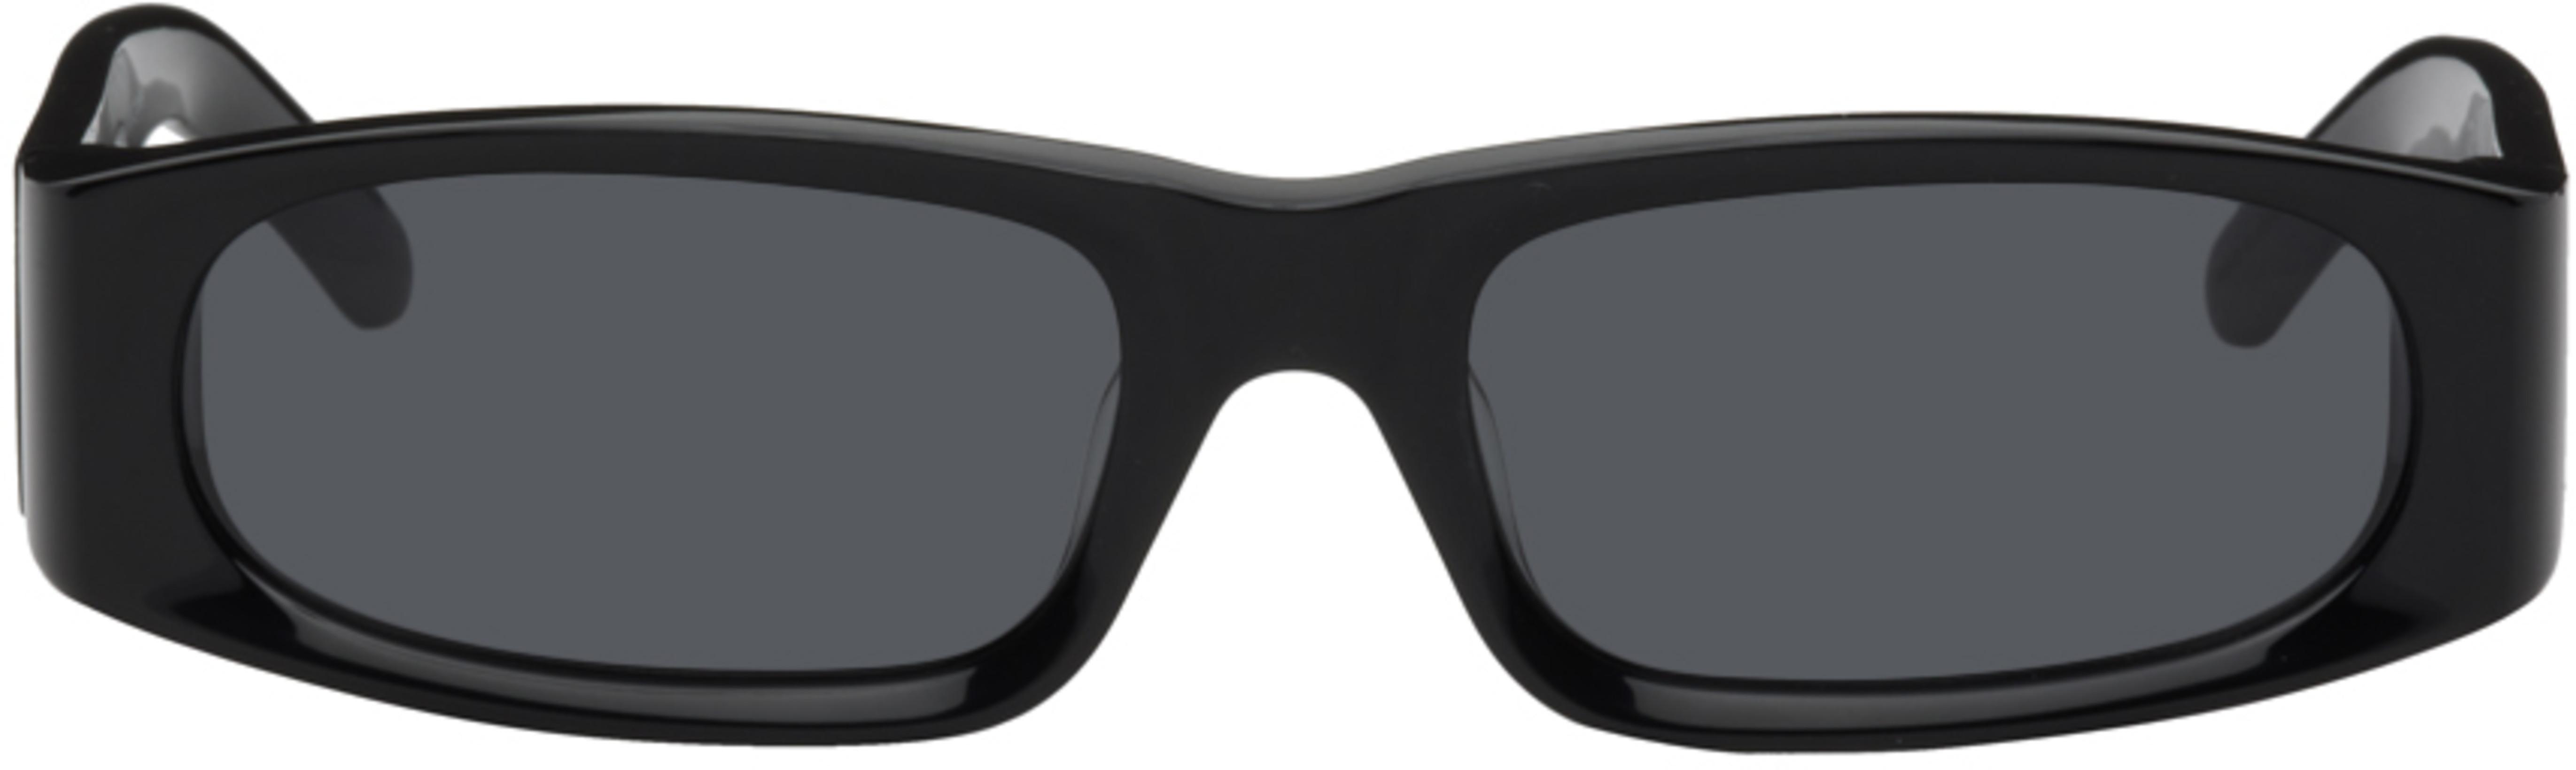 Black Big Trouble Sunglasses by BONNIE CLYDE